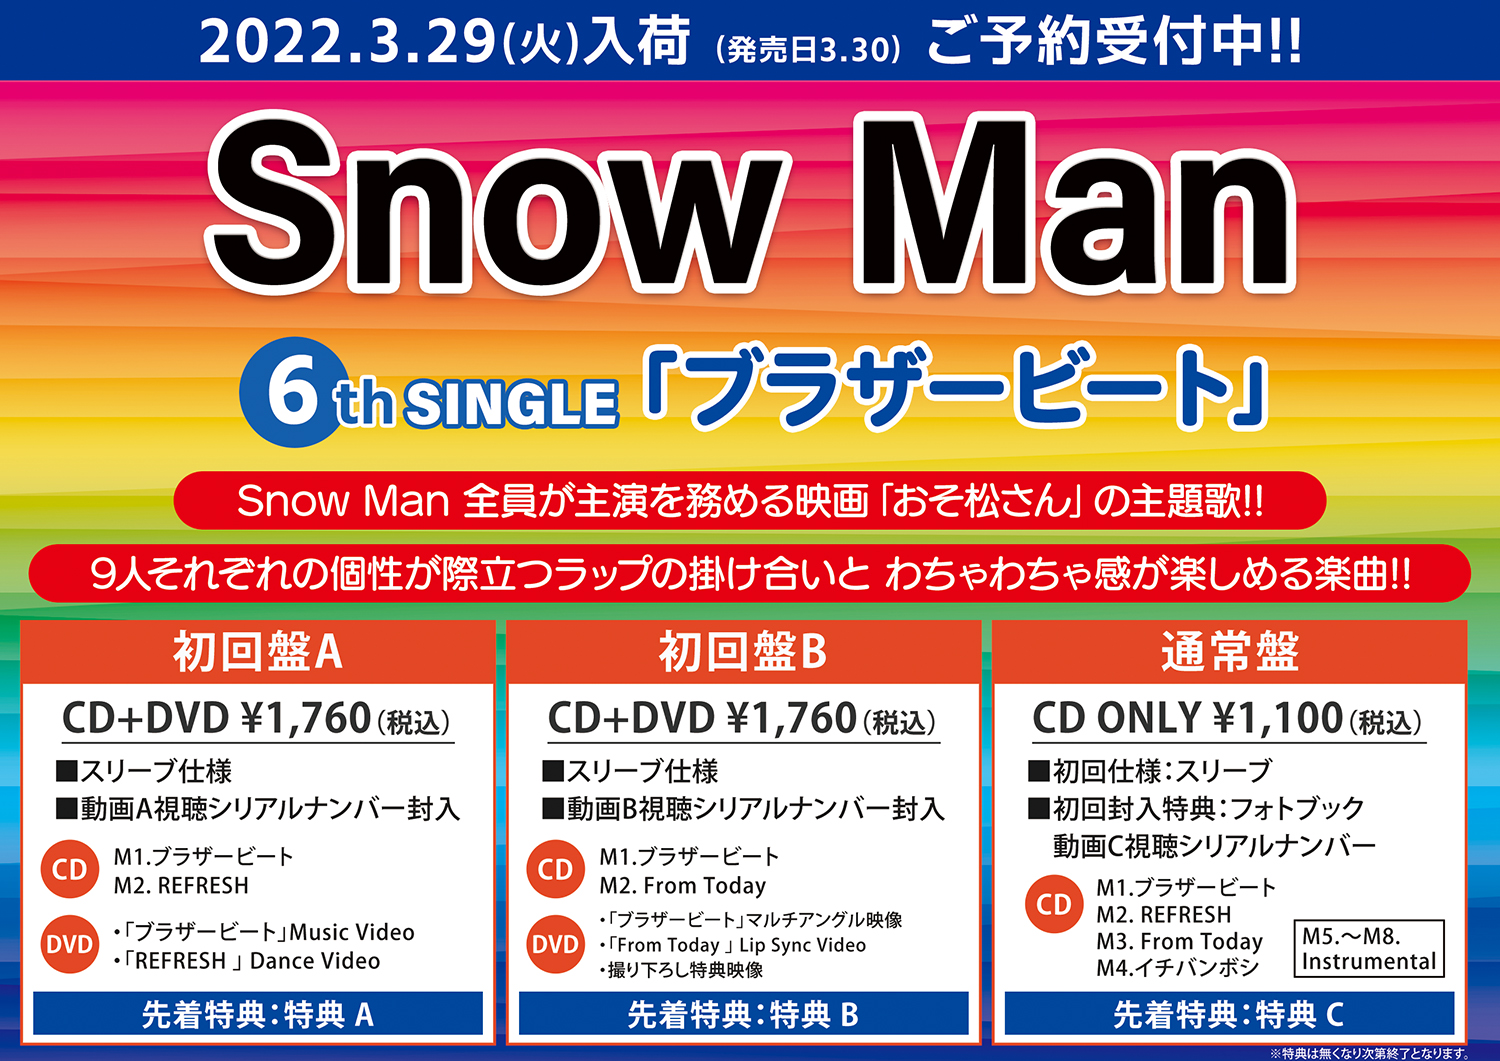 Snow Man 6thシングル『ブラザービート』 3/30発売！ご予約受付中